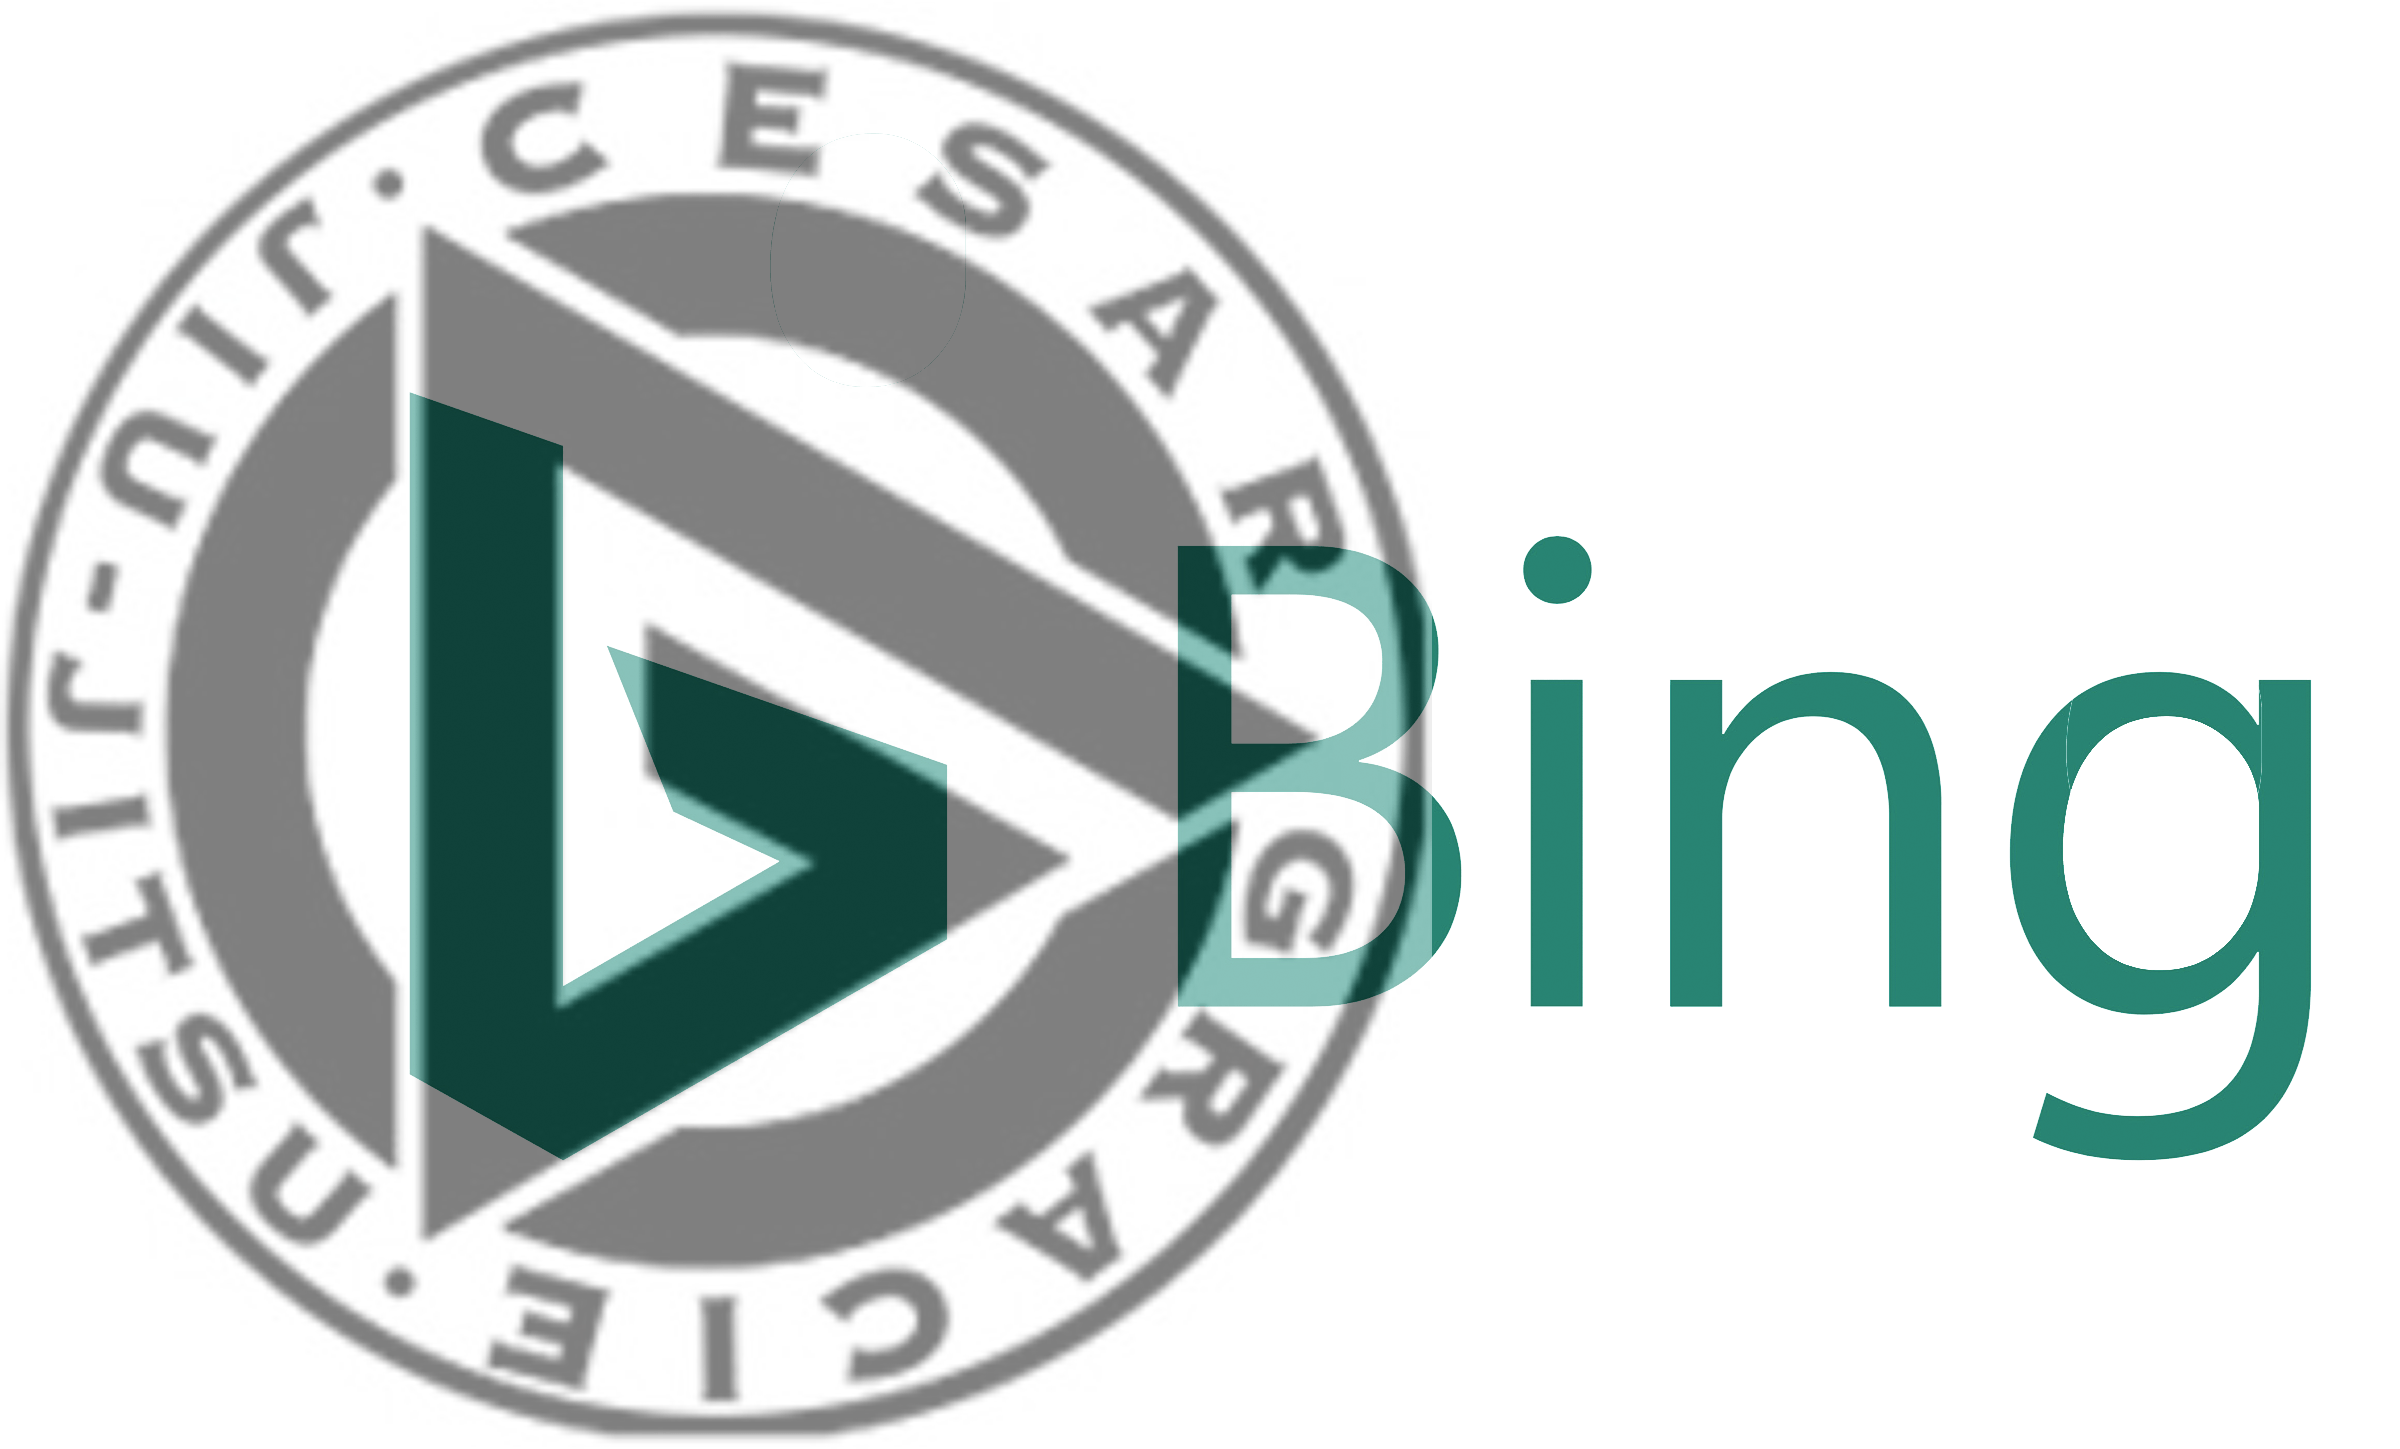 Designer of the Bing Logo - Someone at Microsoft really like